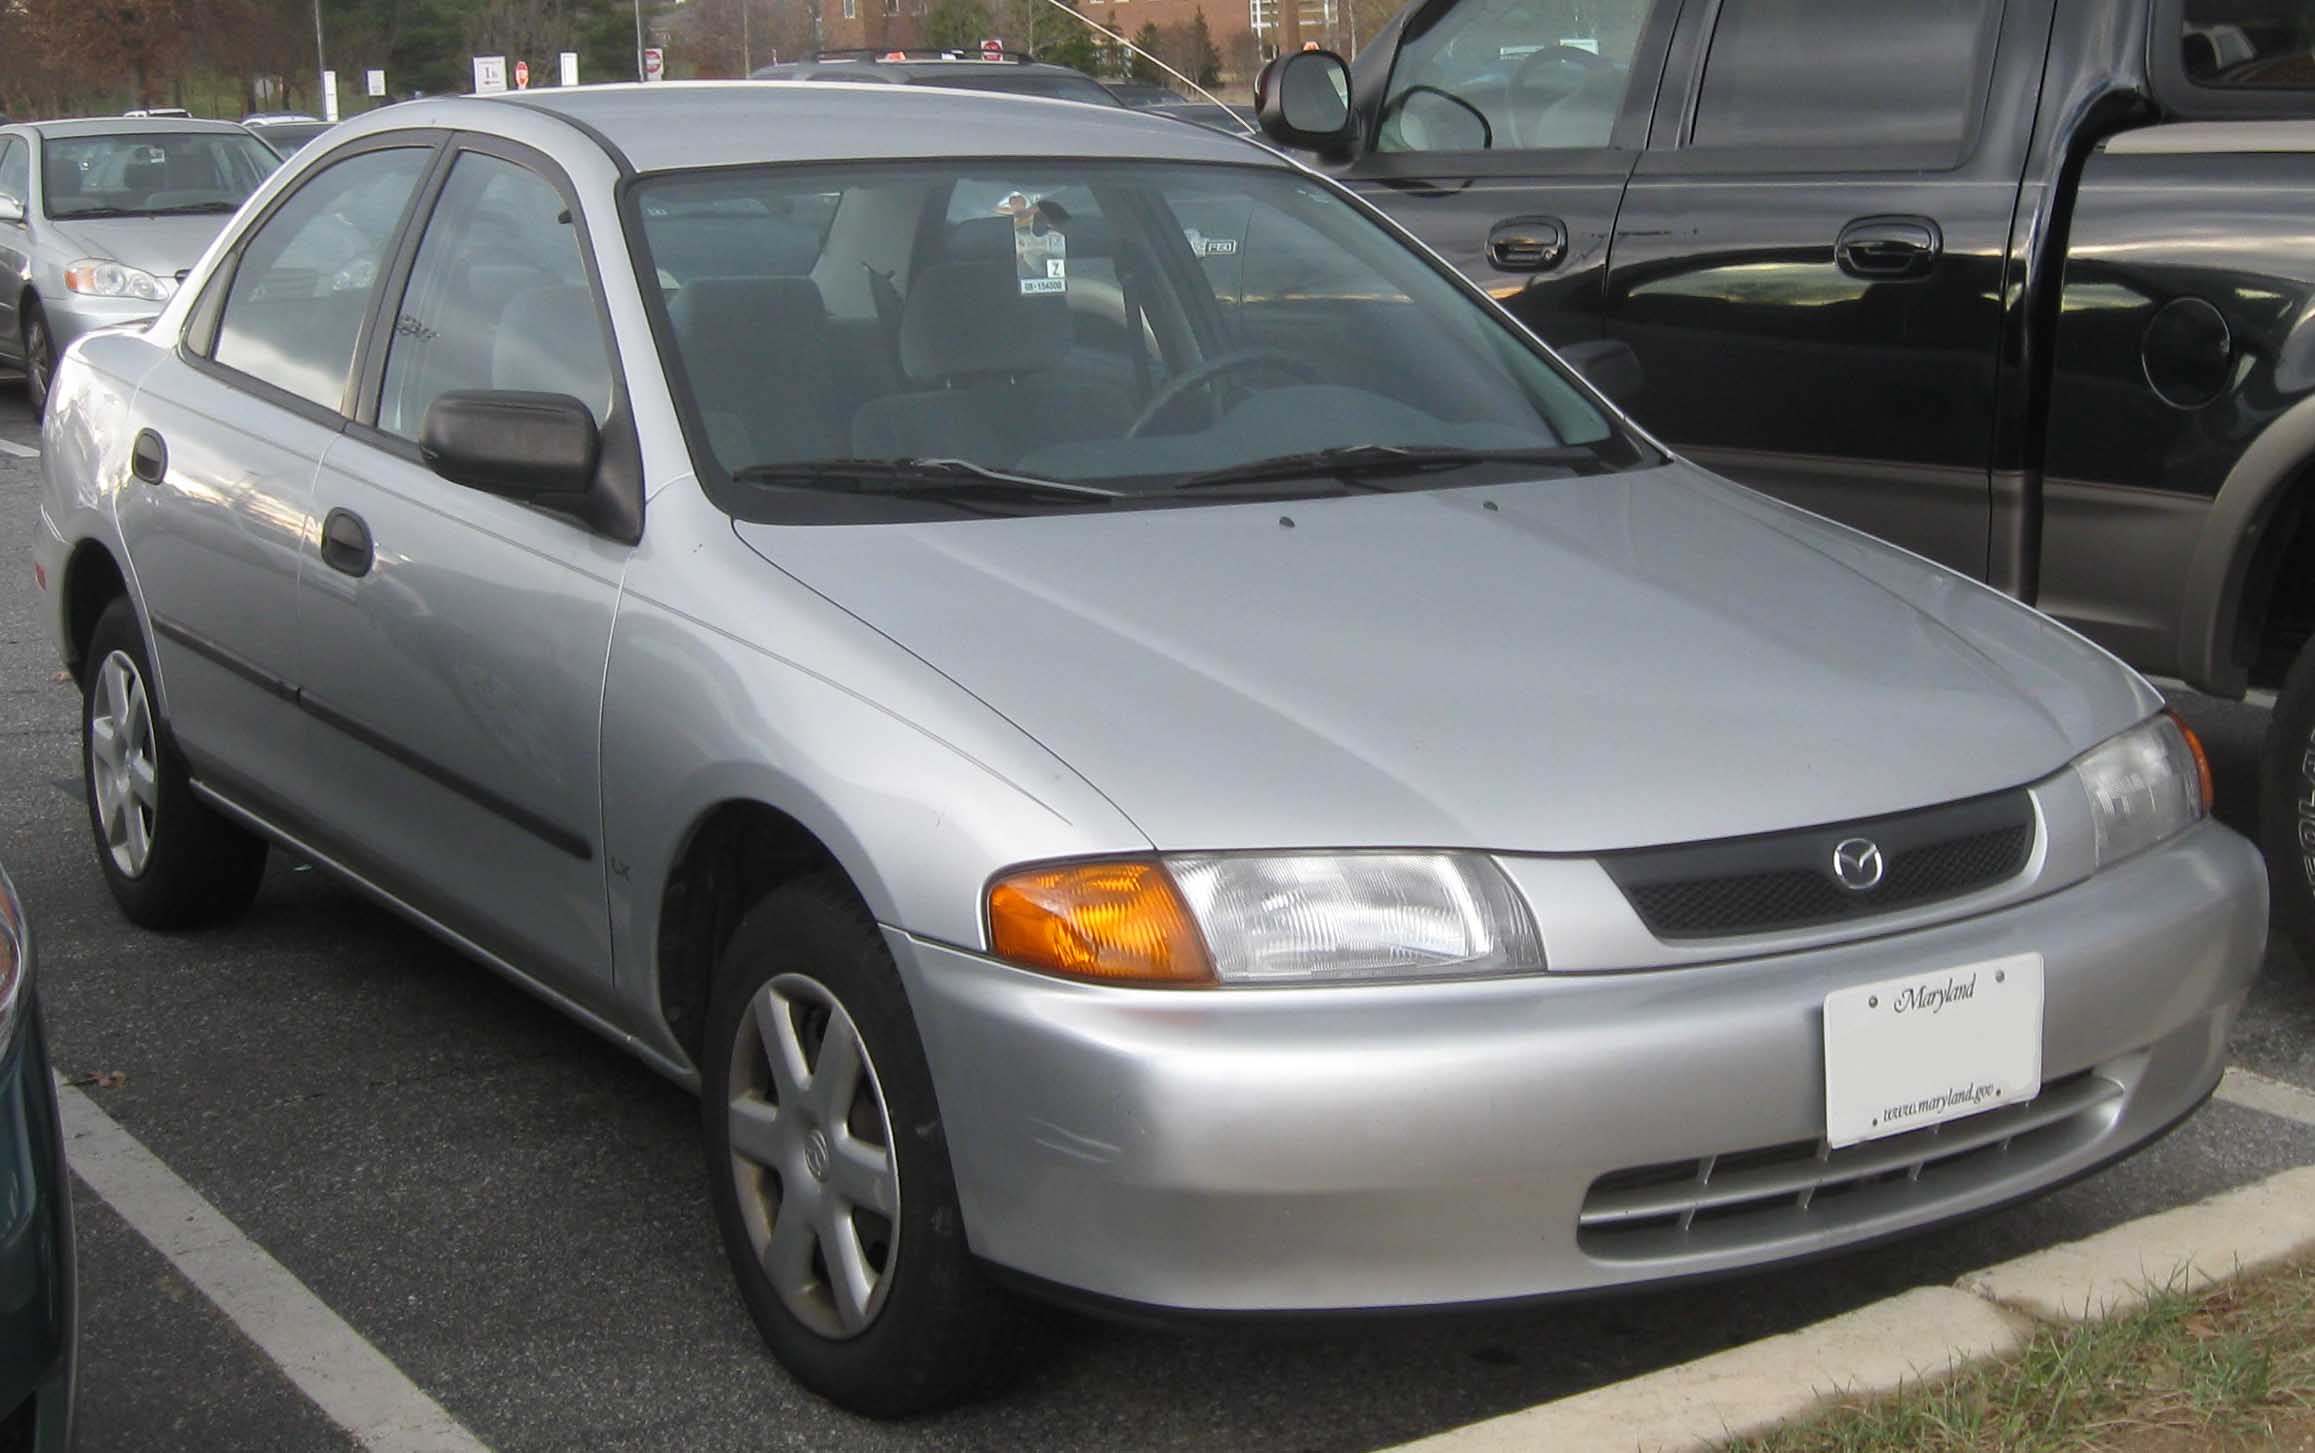 File:1998 Mazda Protege LX.jpg - Wikimedia Commons